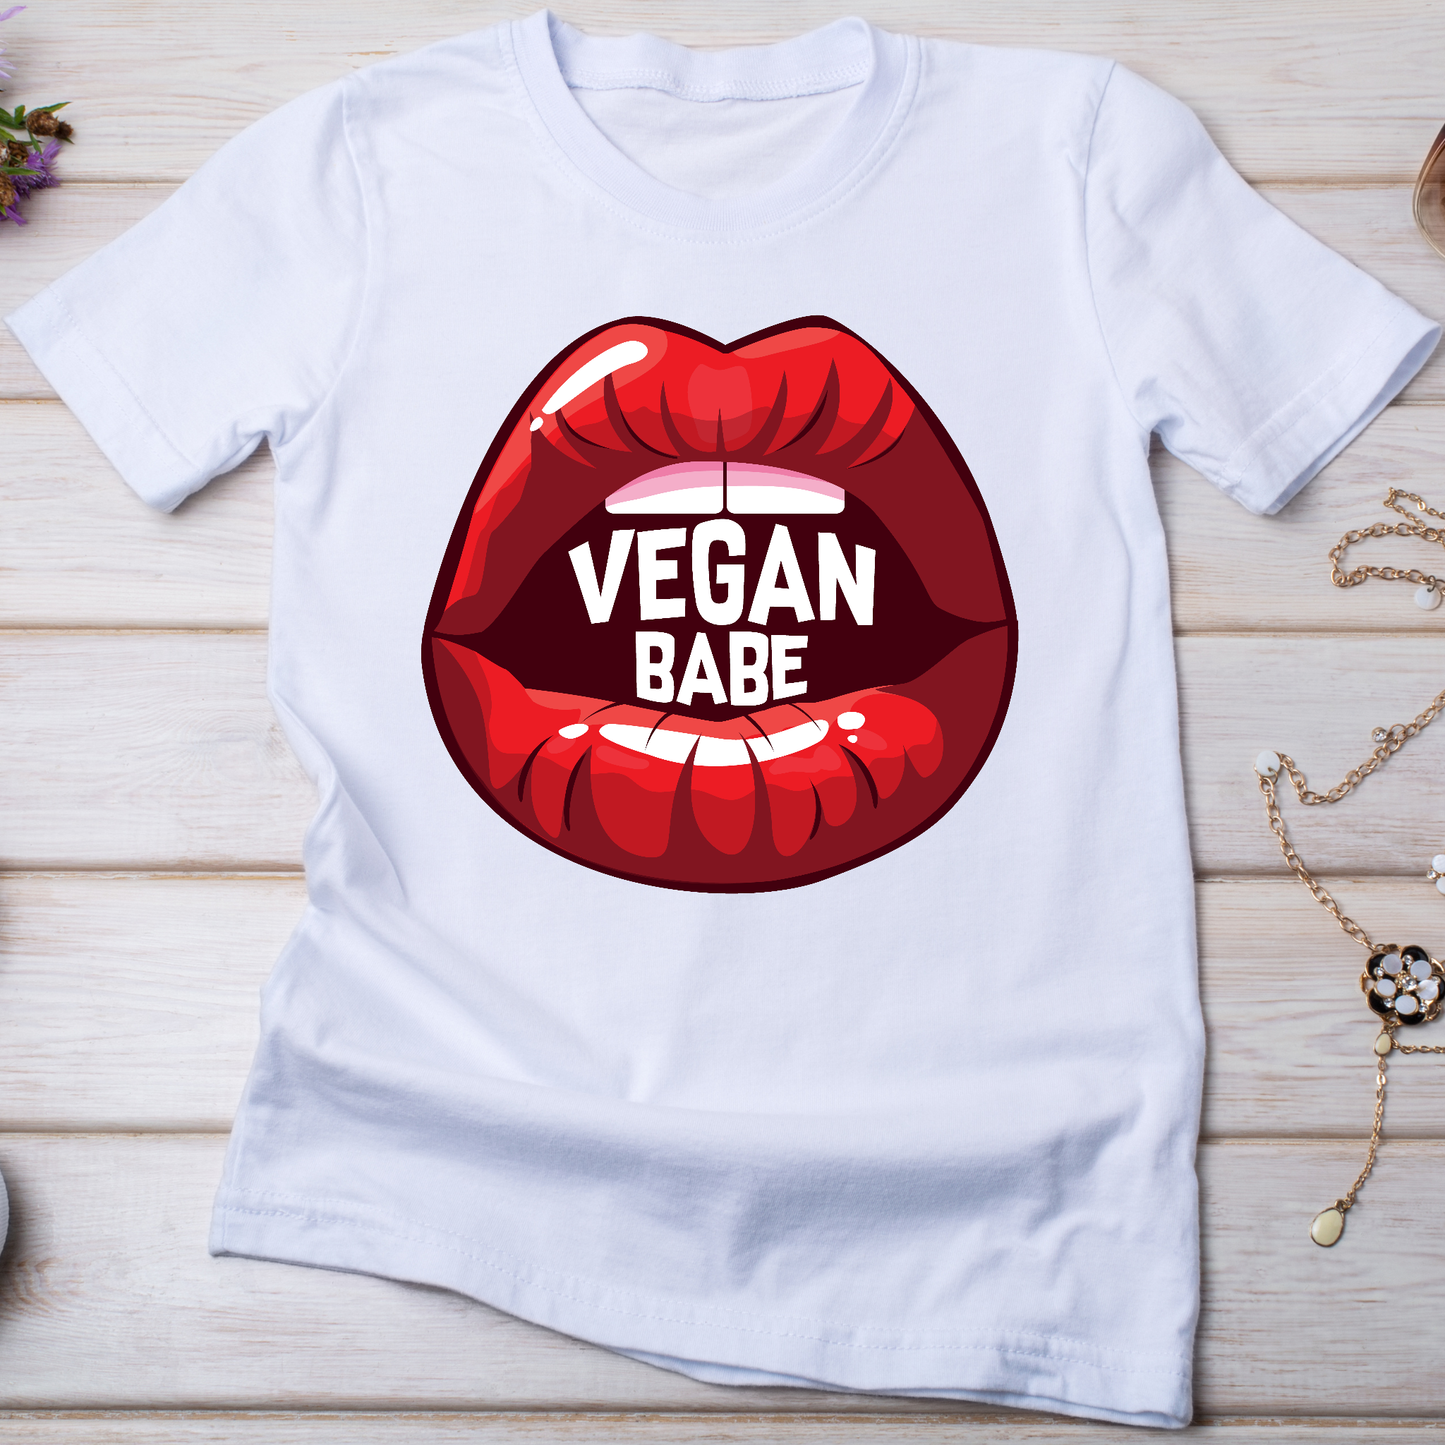 Vegan babe Women's funny vegan t-shirt - Premium t-shirt from Lees Krazy Teez - Just $19.95! Shop now at Lees Krazy Teez